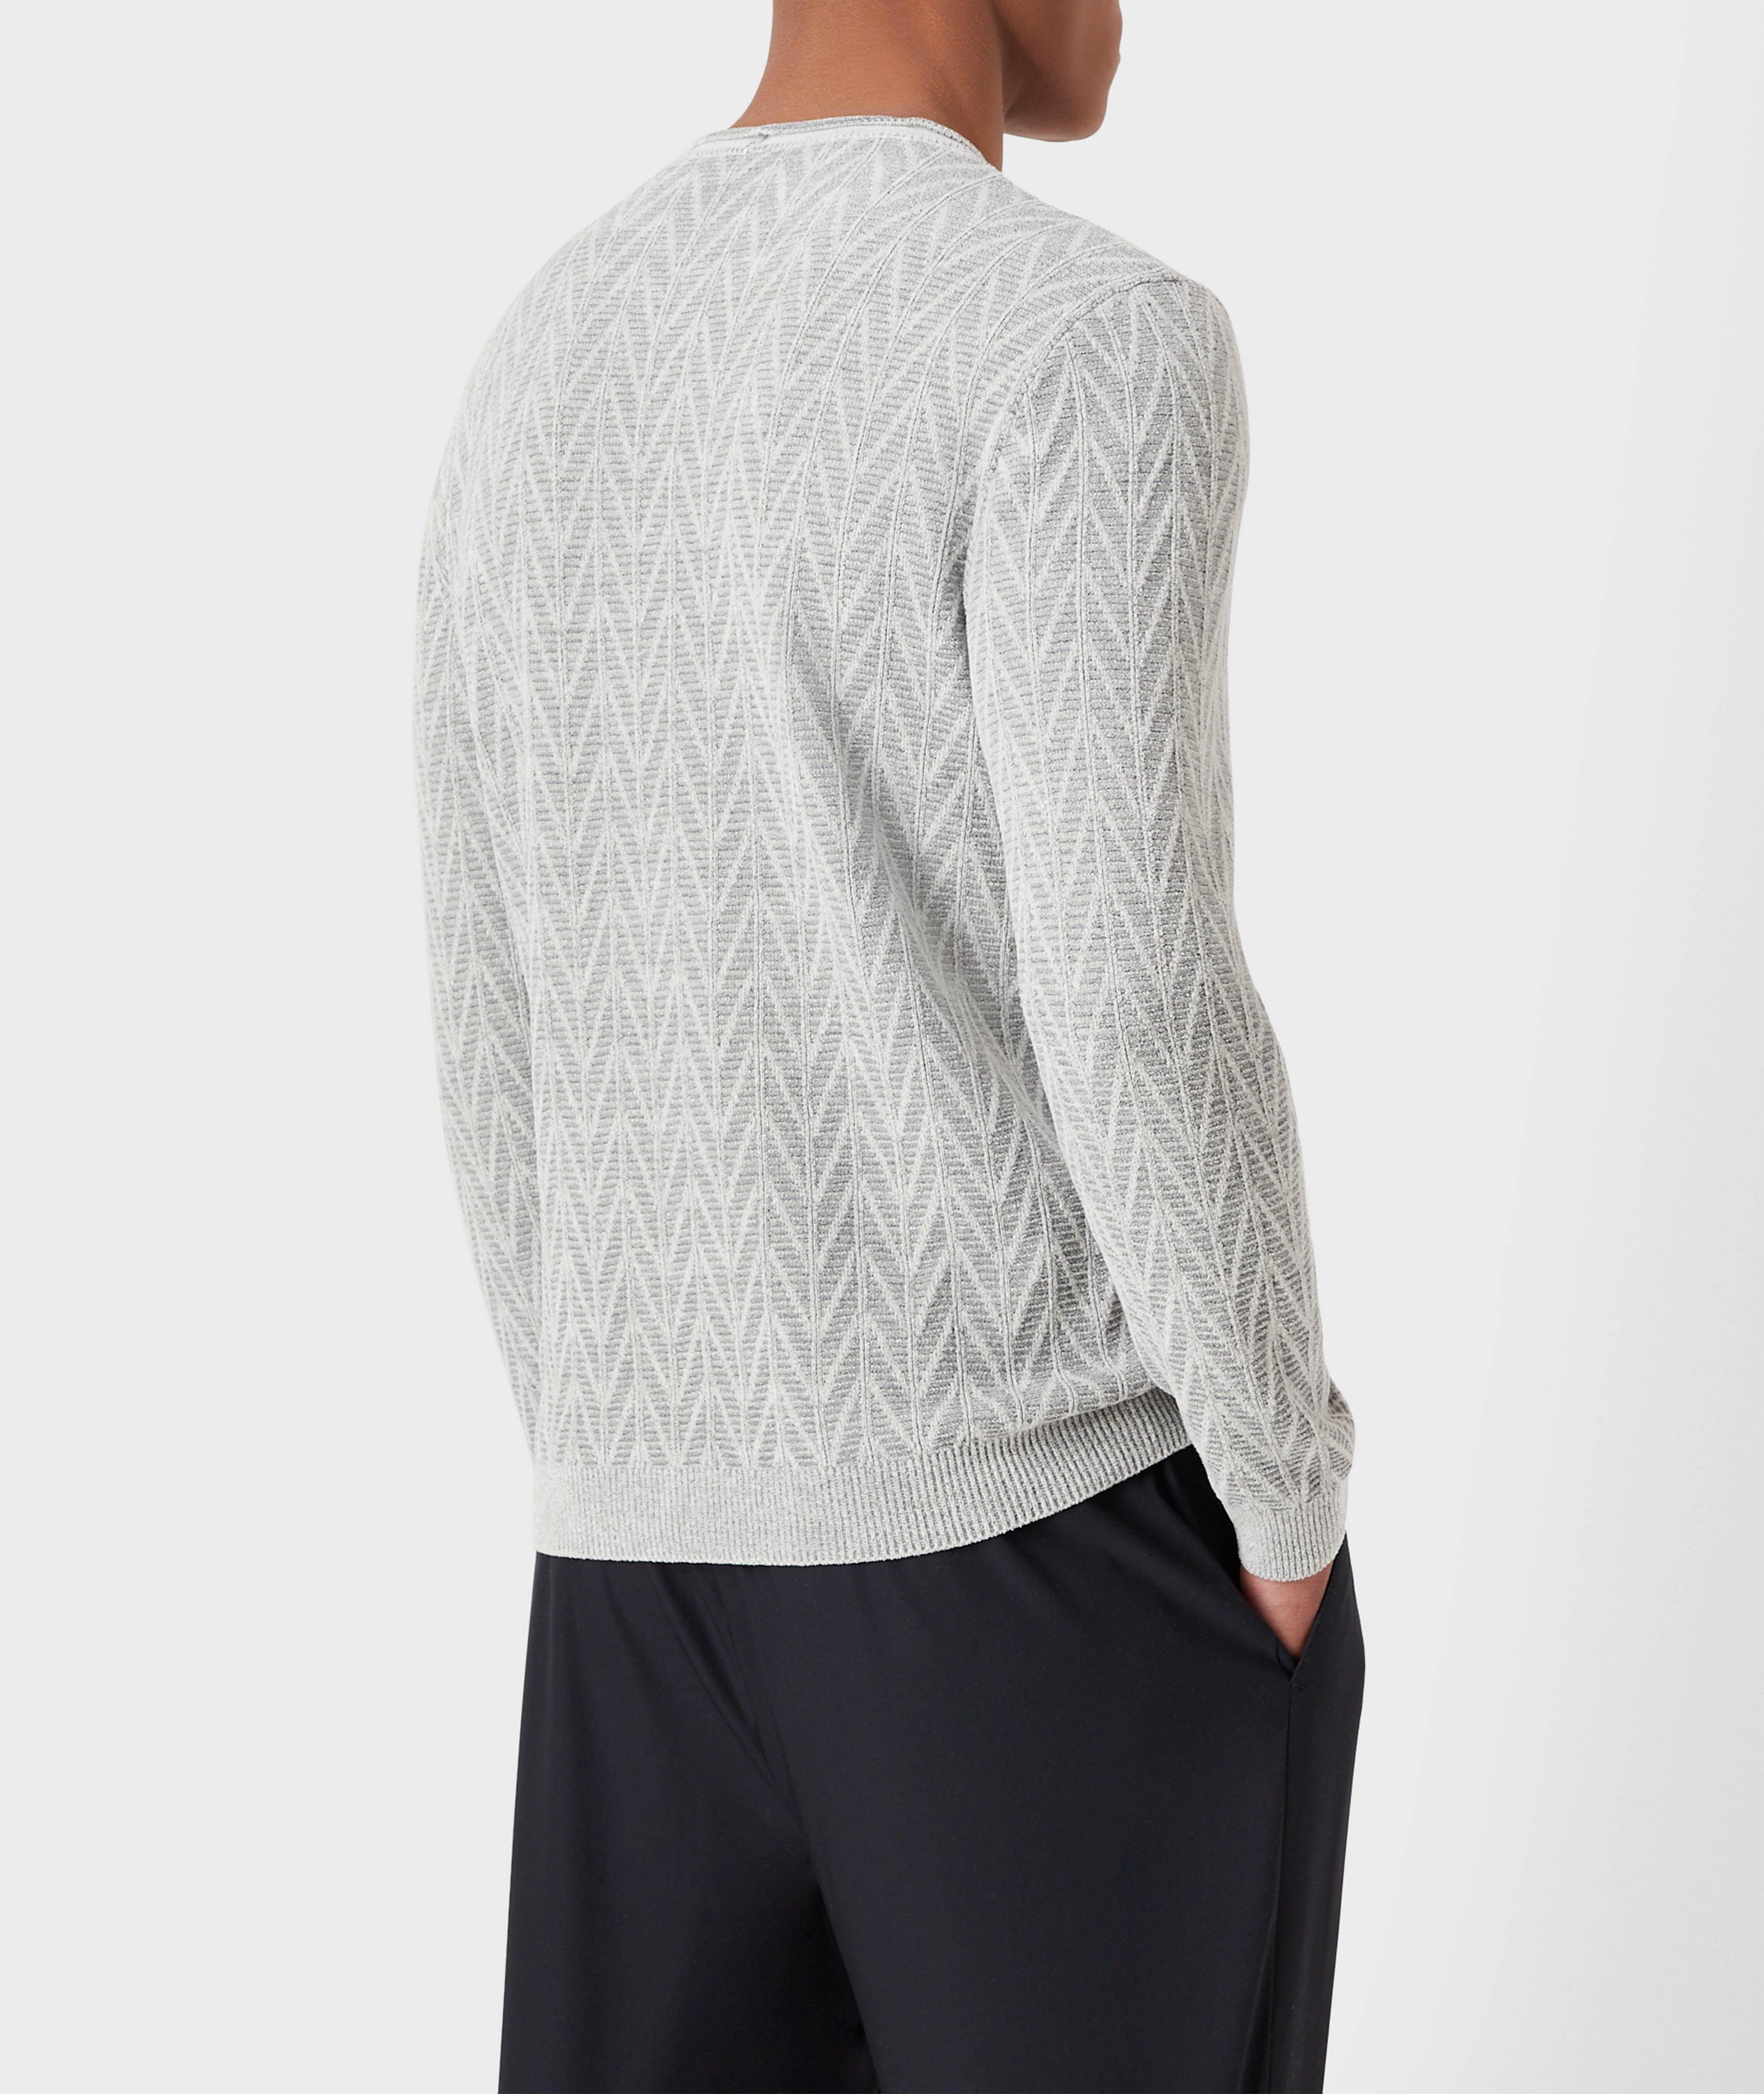 Wool-Blend Jacquard Chevron Sweater image 2